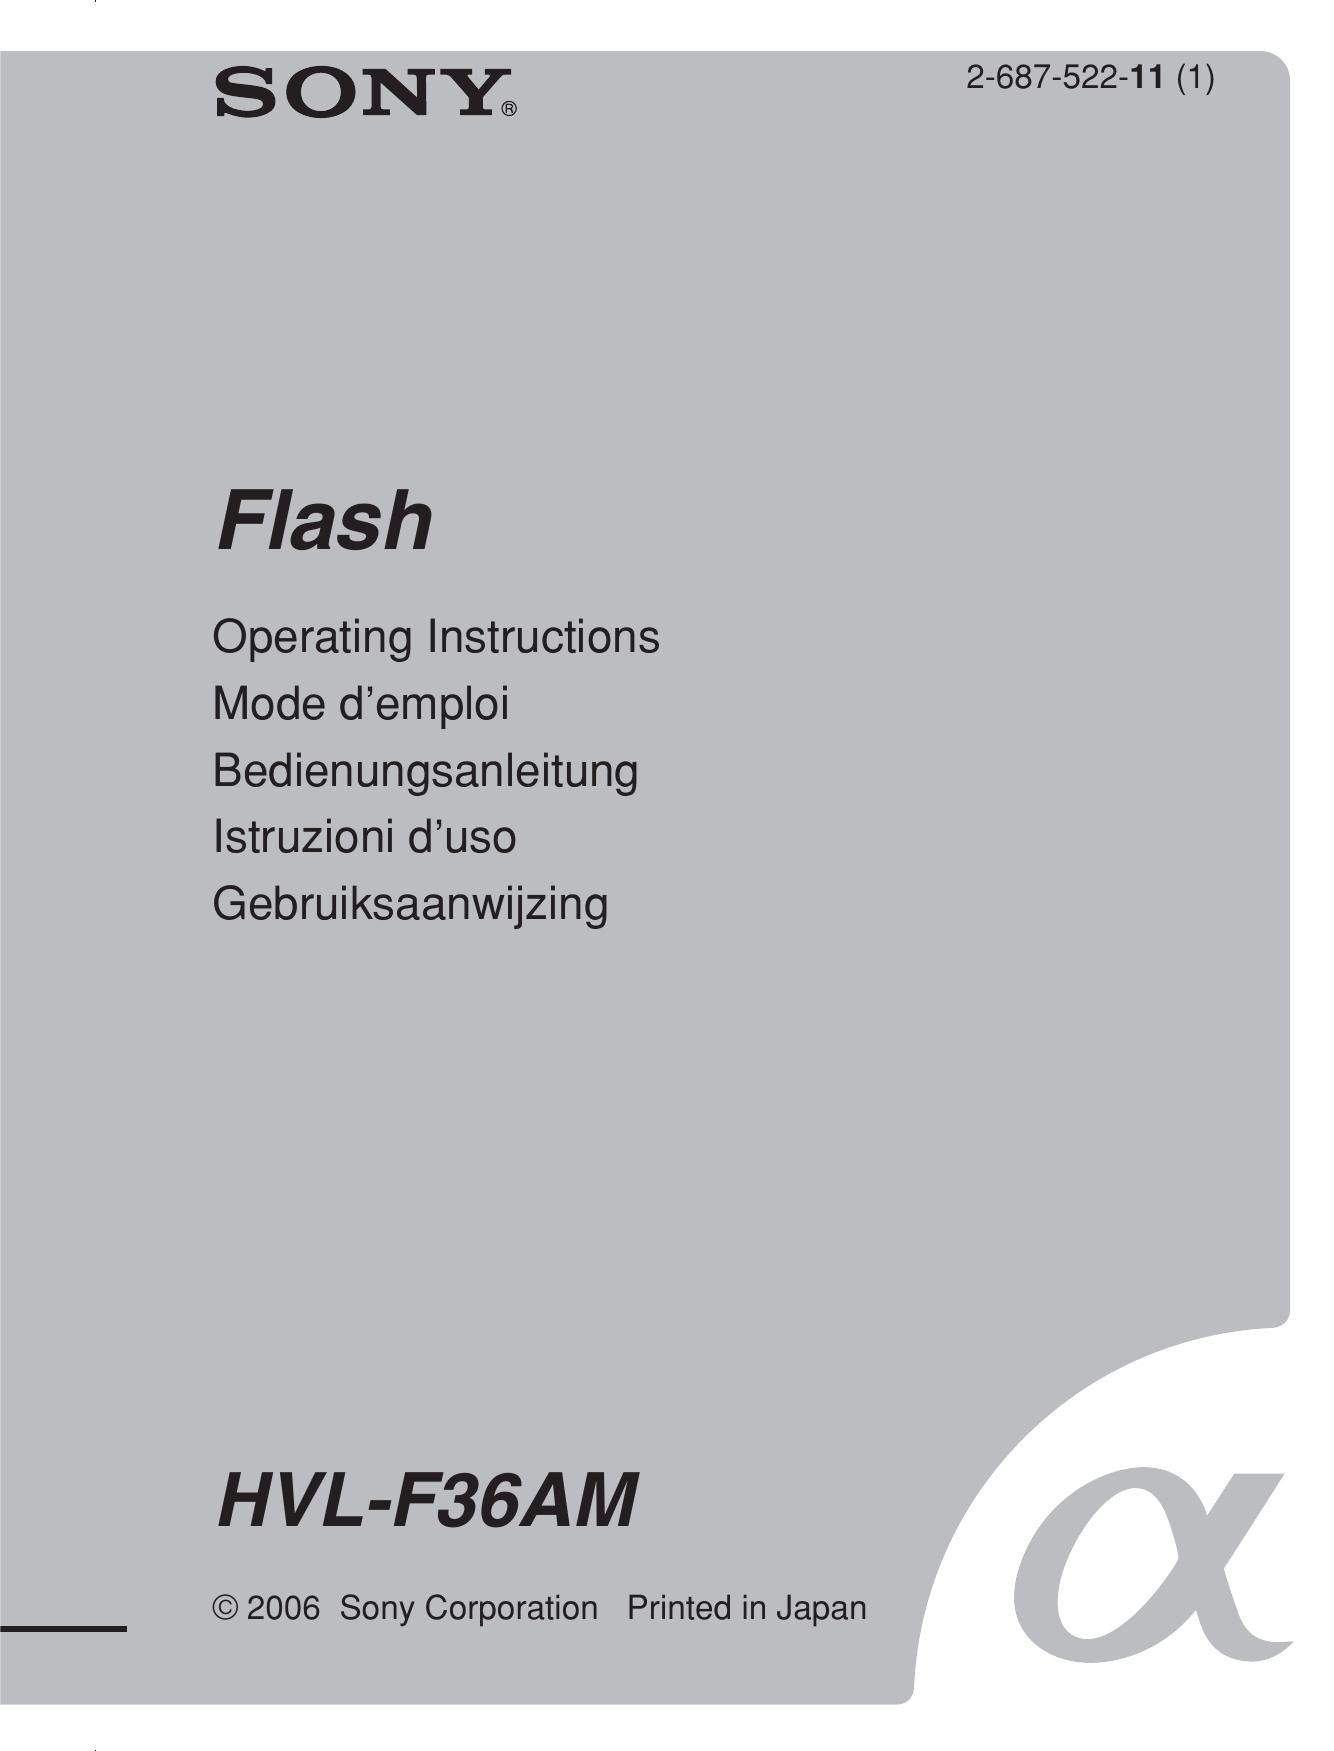 Sony HVL-F36AM Camera Flash User Manual